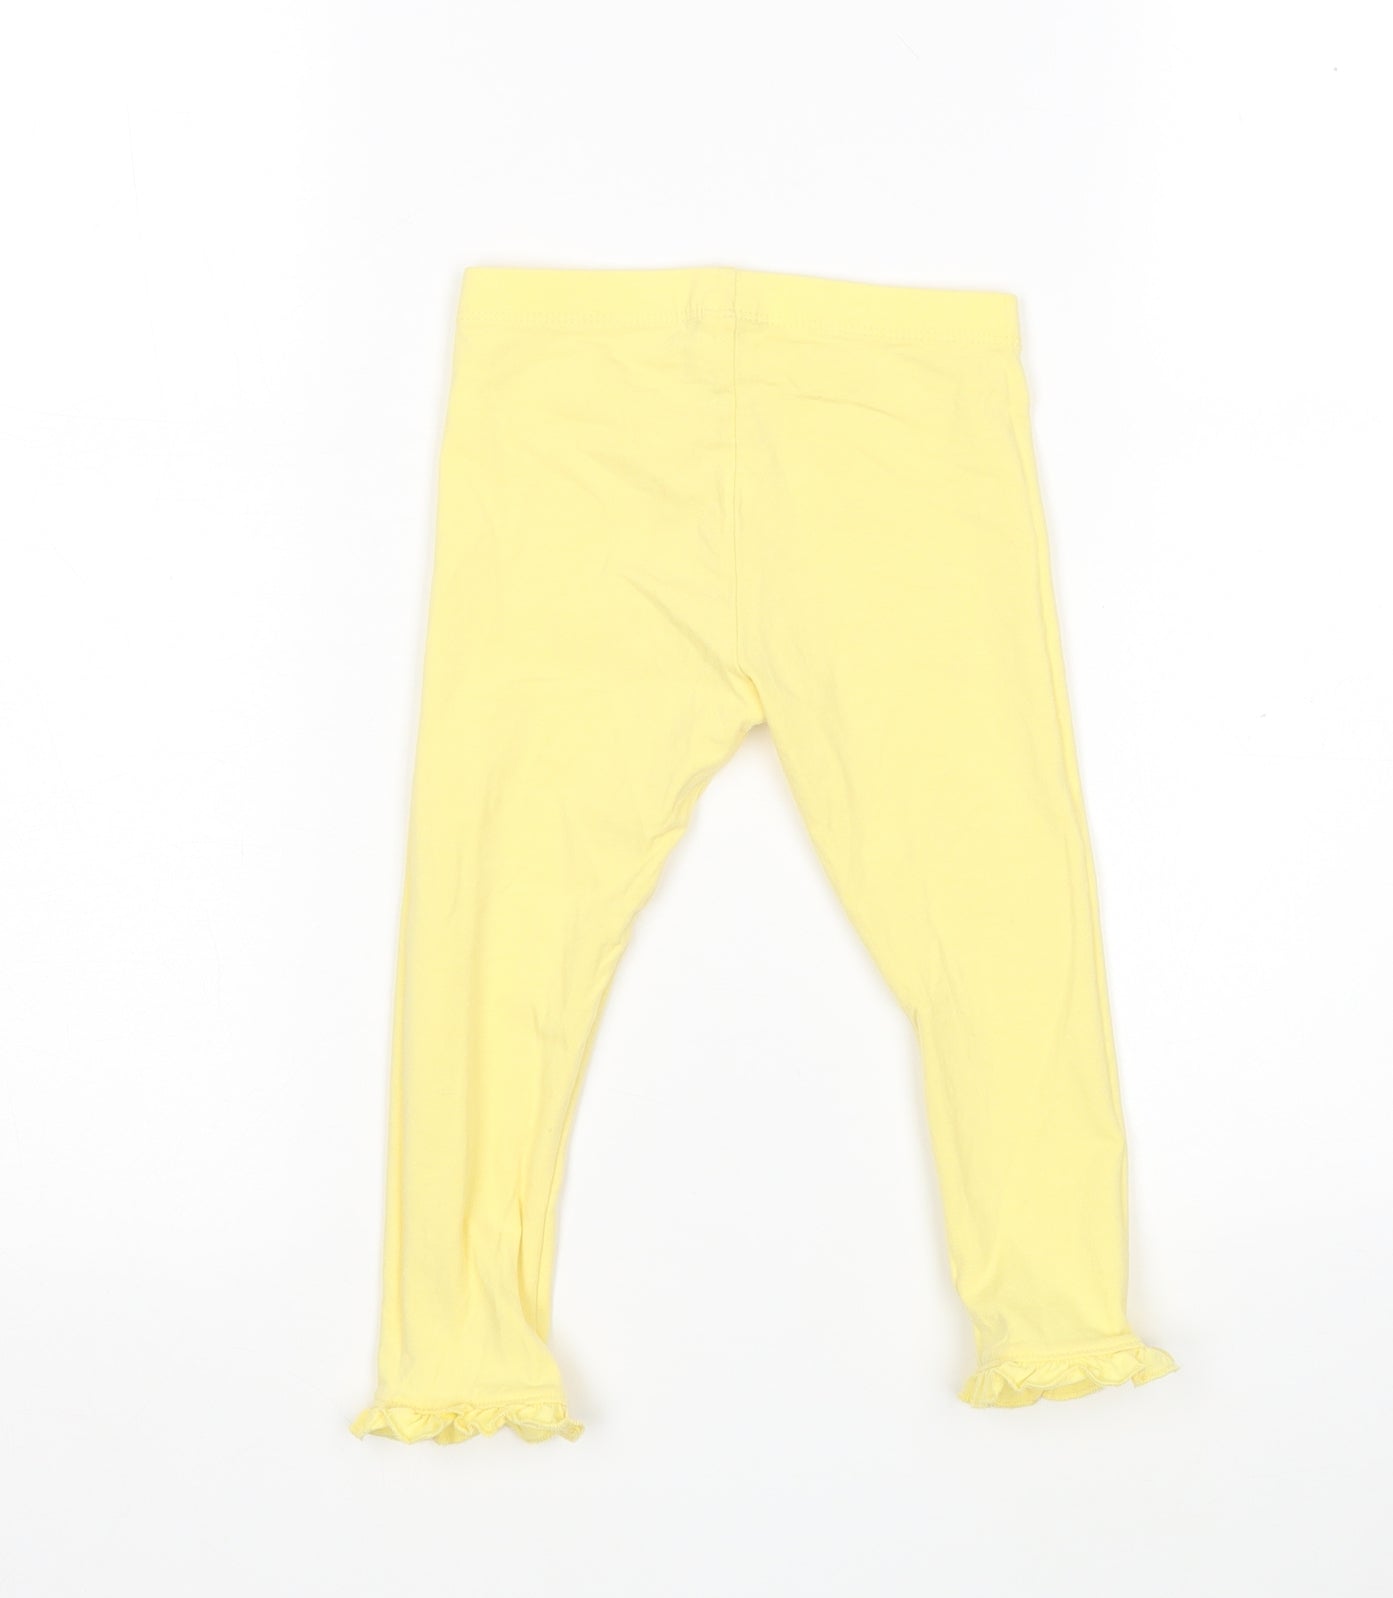 Mini Club Girls Yellow  Cotton Sweatpants Trousers Size 2-3 Years  Regular  - Leggings